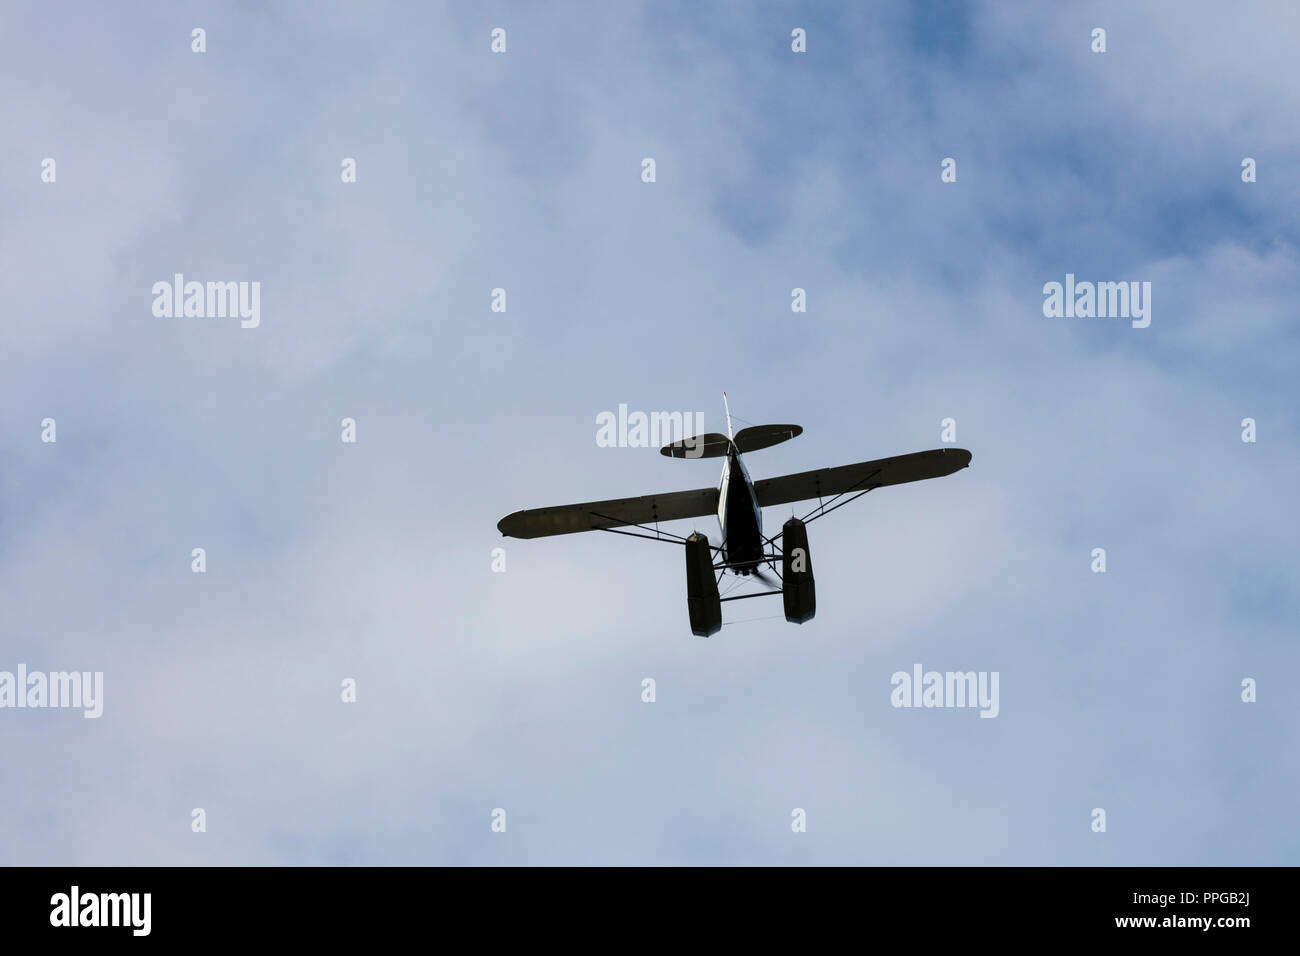 Seaplane Or Floatplane Flying In Sky Overhead Stock Photo Alamy